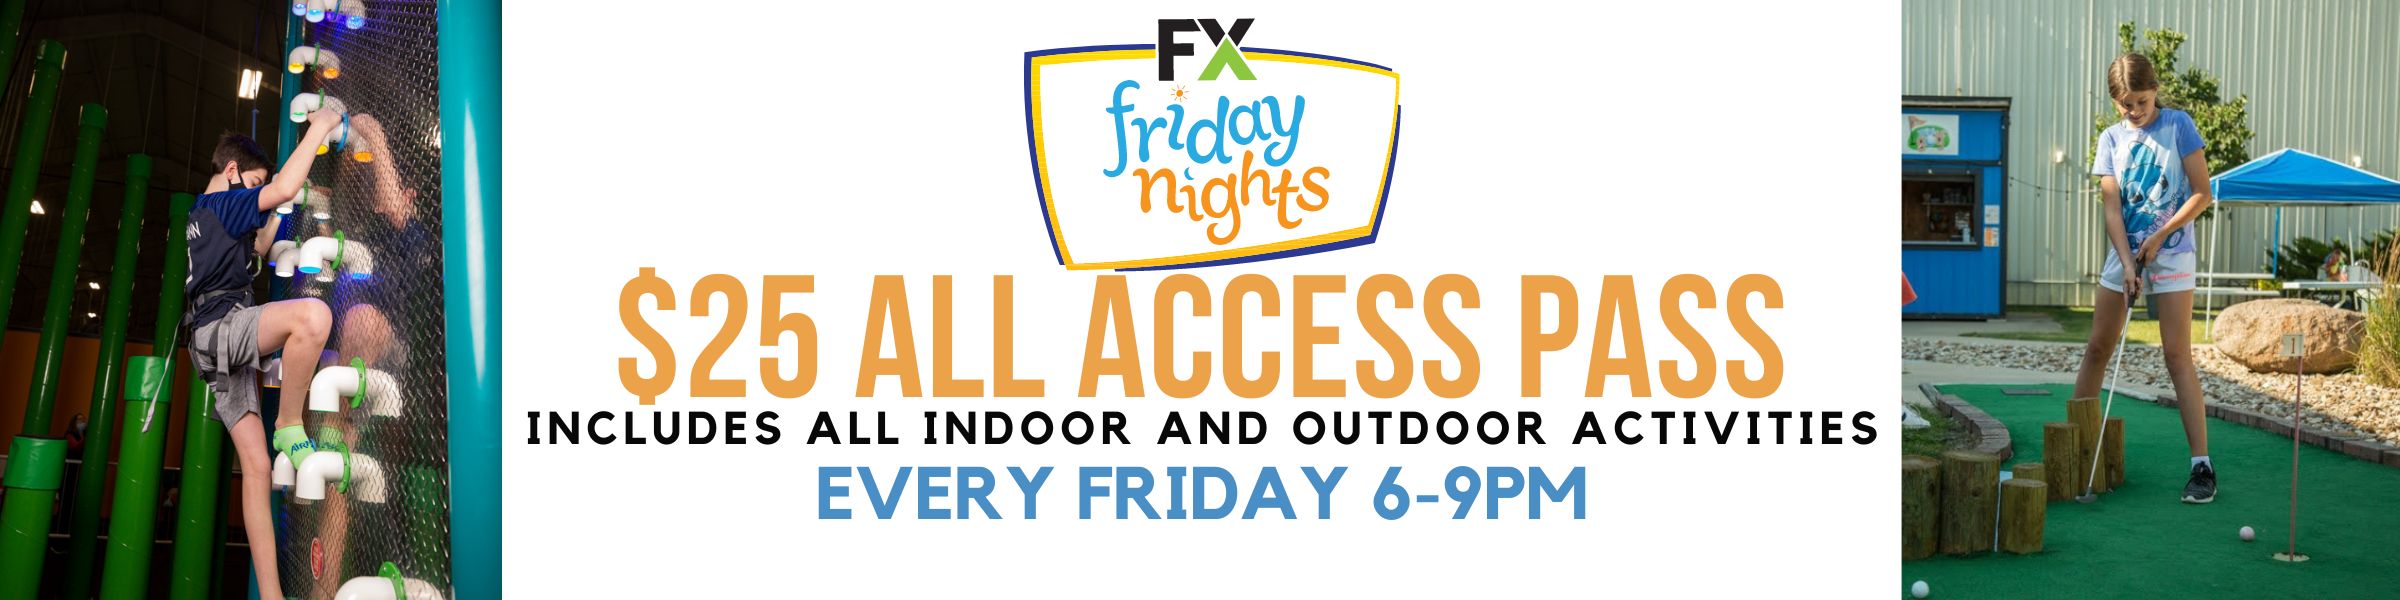 FX Friday Nights banner